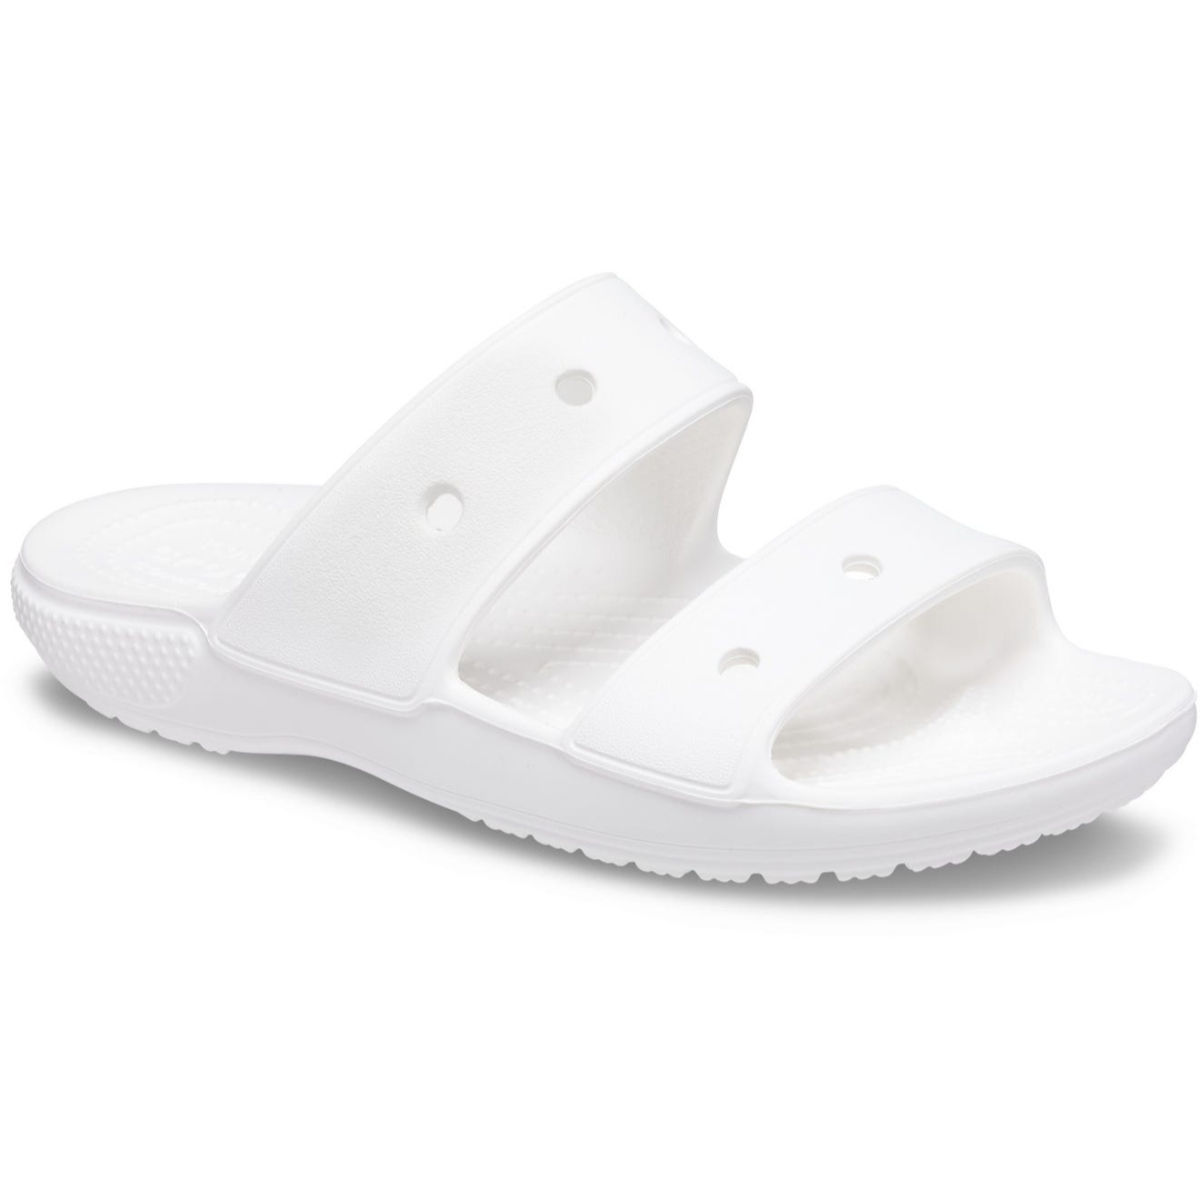 Crocs Classic 206761 Two-Strap Sandals Waterproof Slides White Mens Size 13  | eBay